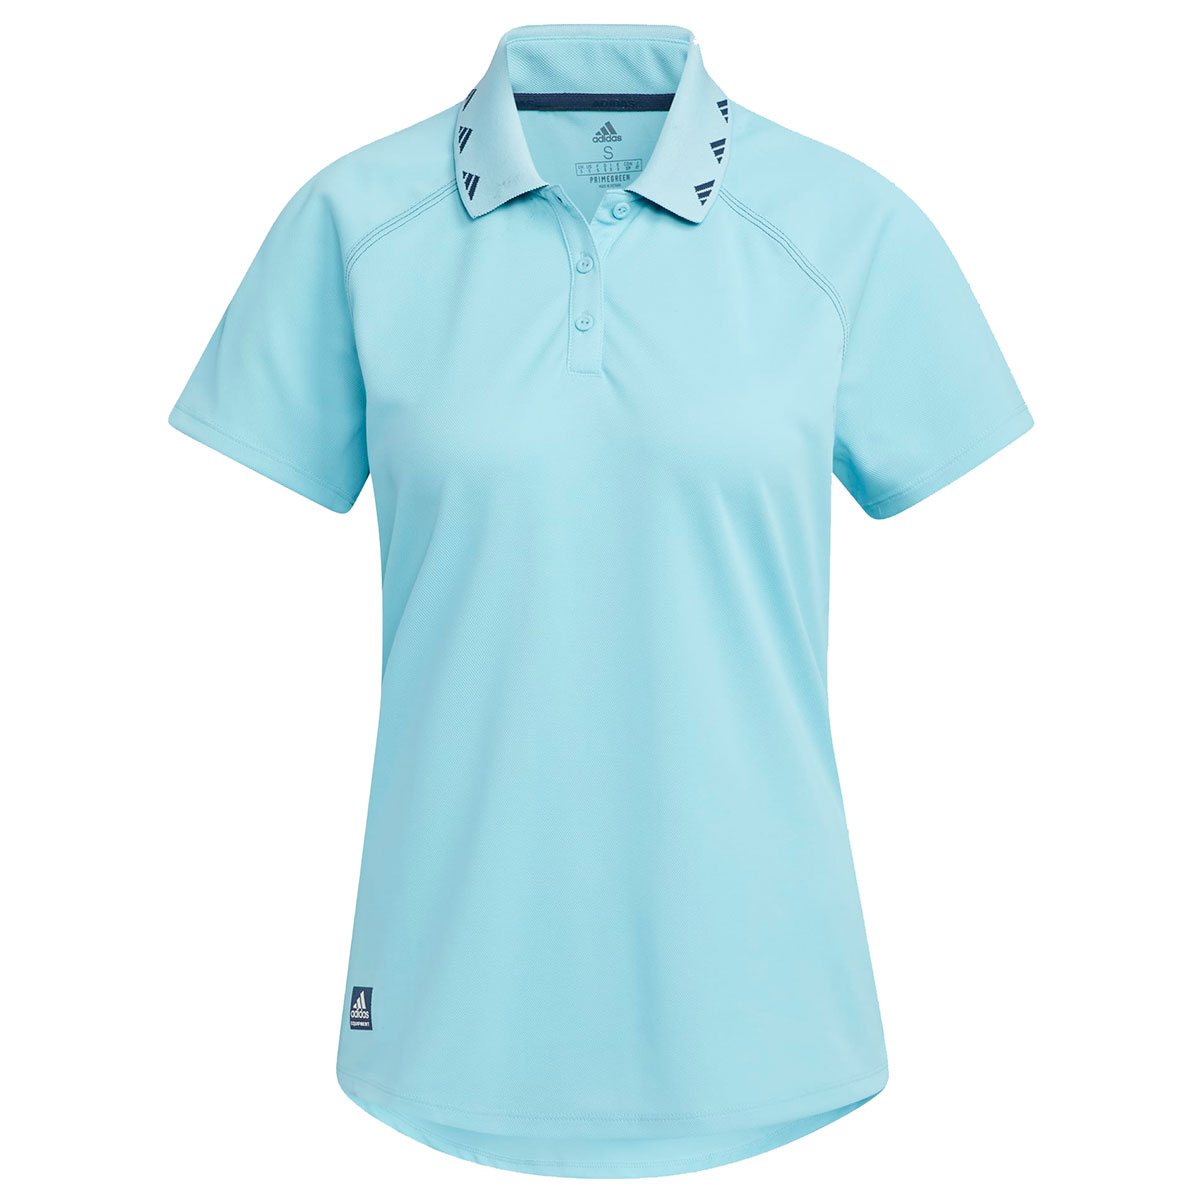 Descanso Cambio Trastornado adidas Ladies Equipment Short Sleeve UV Golf Polo Shirt from american golf